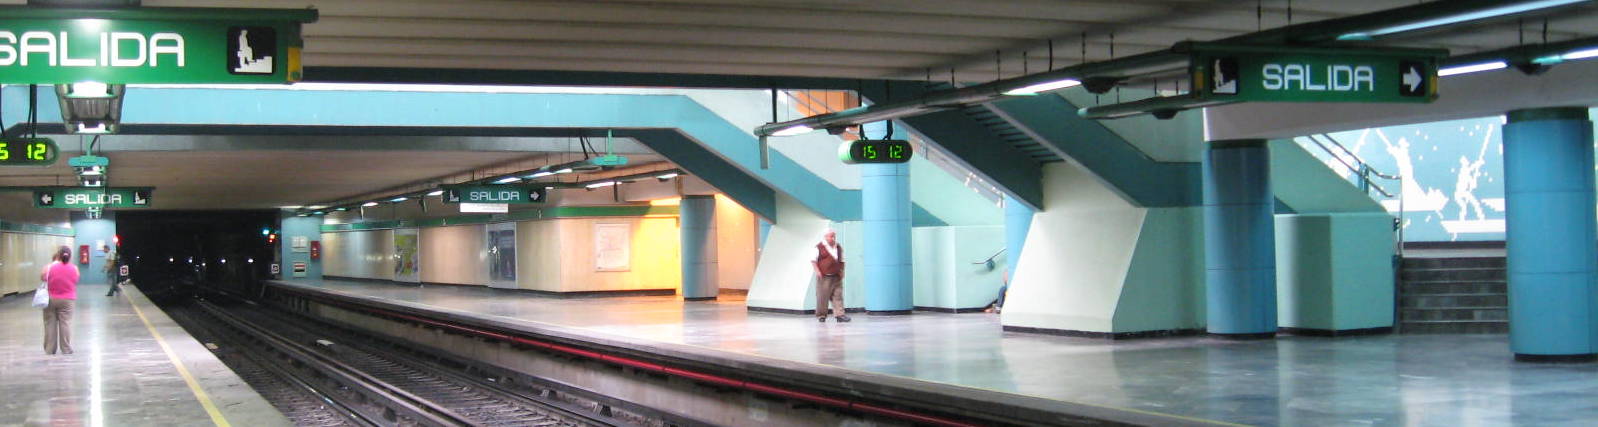 Metro Santa Anita